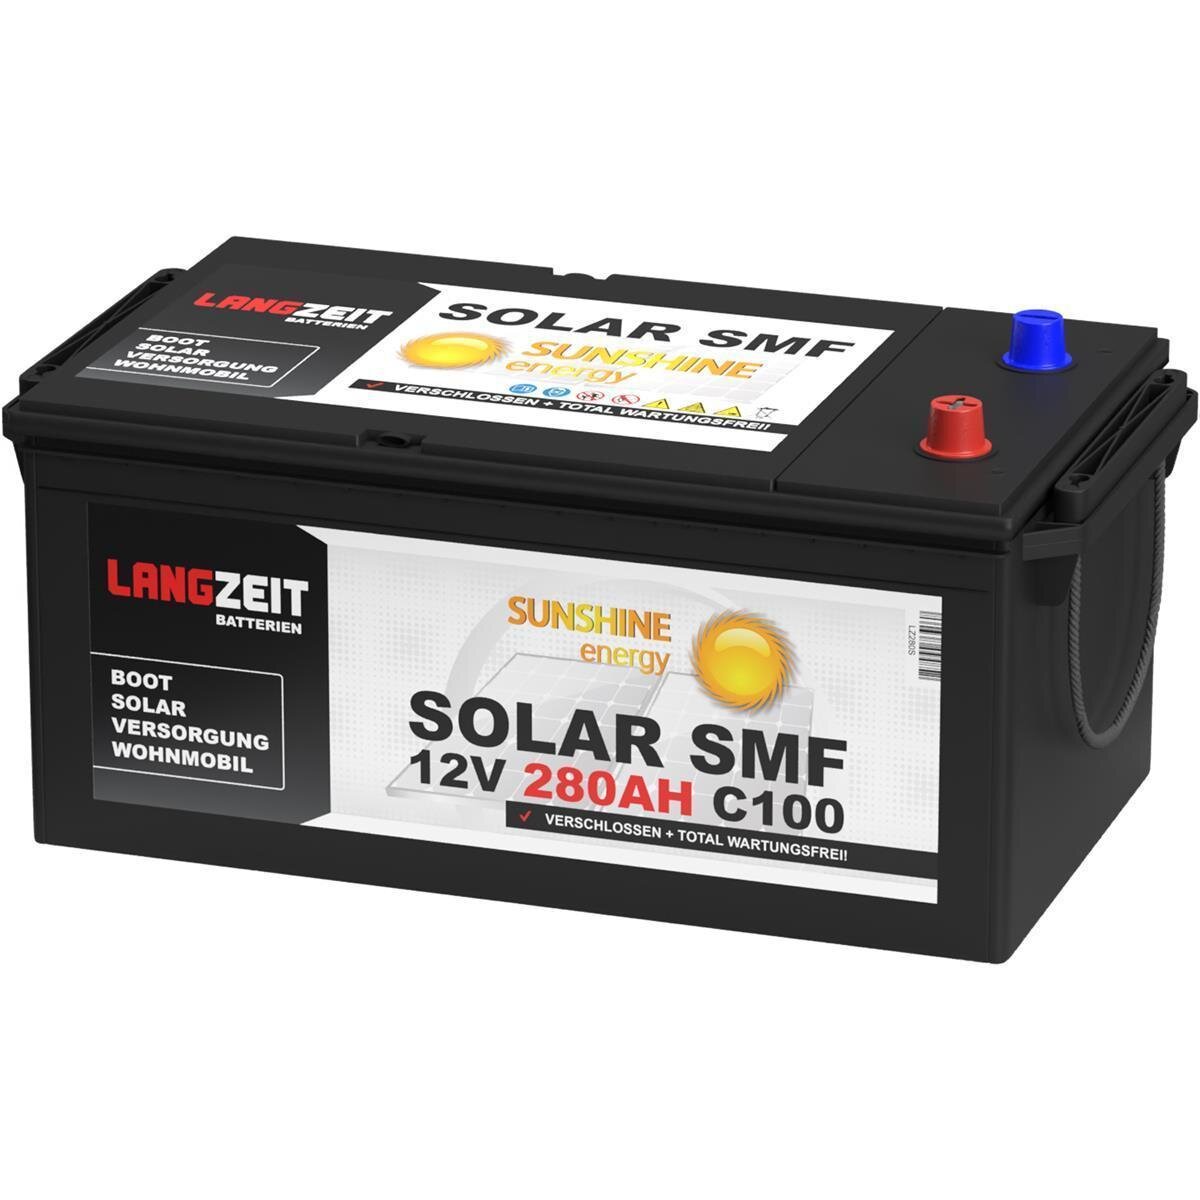 Langzeit Solarbatterie SMF 220Ah 12V, 204,96 €